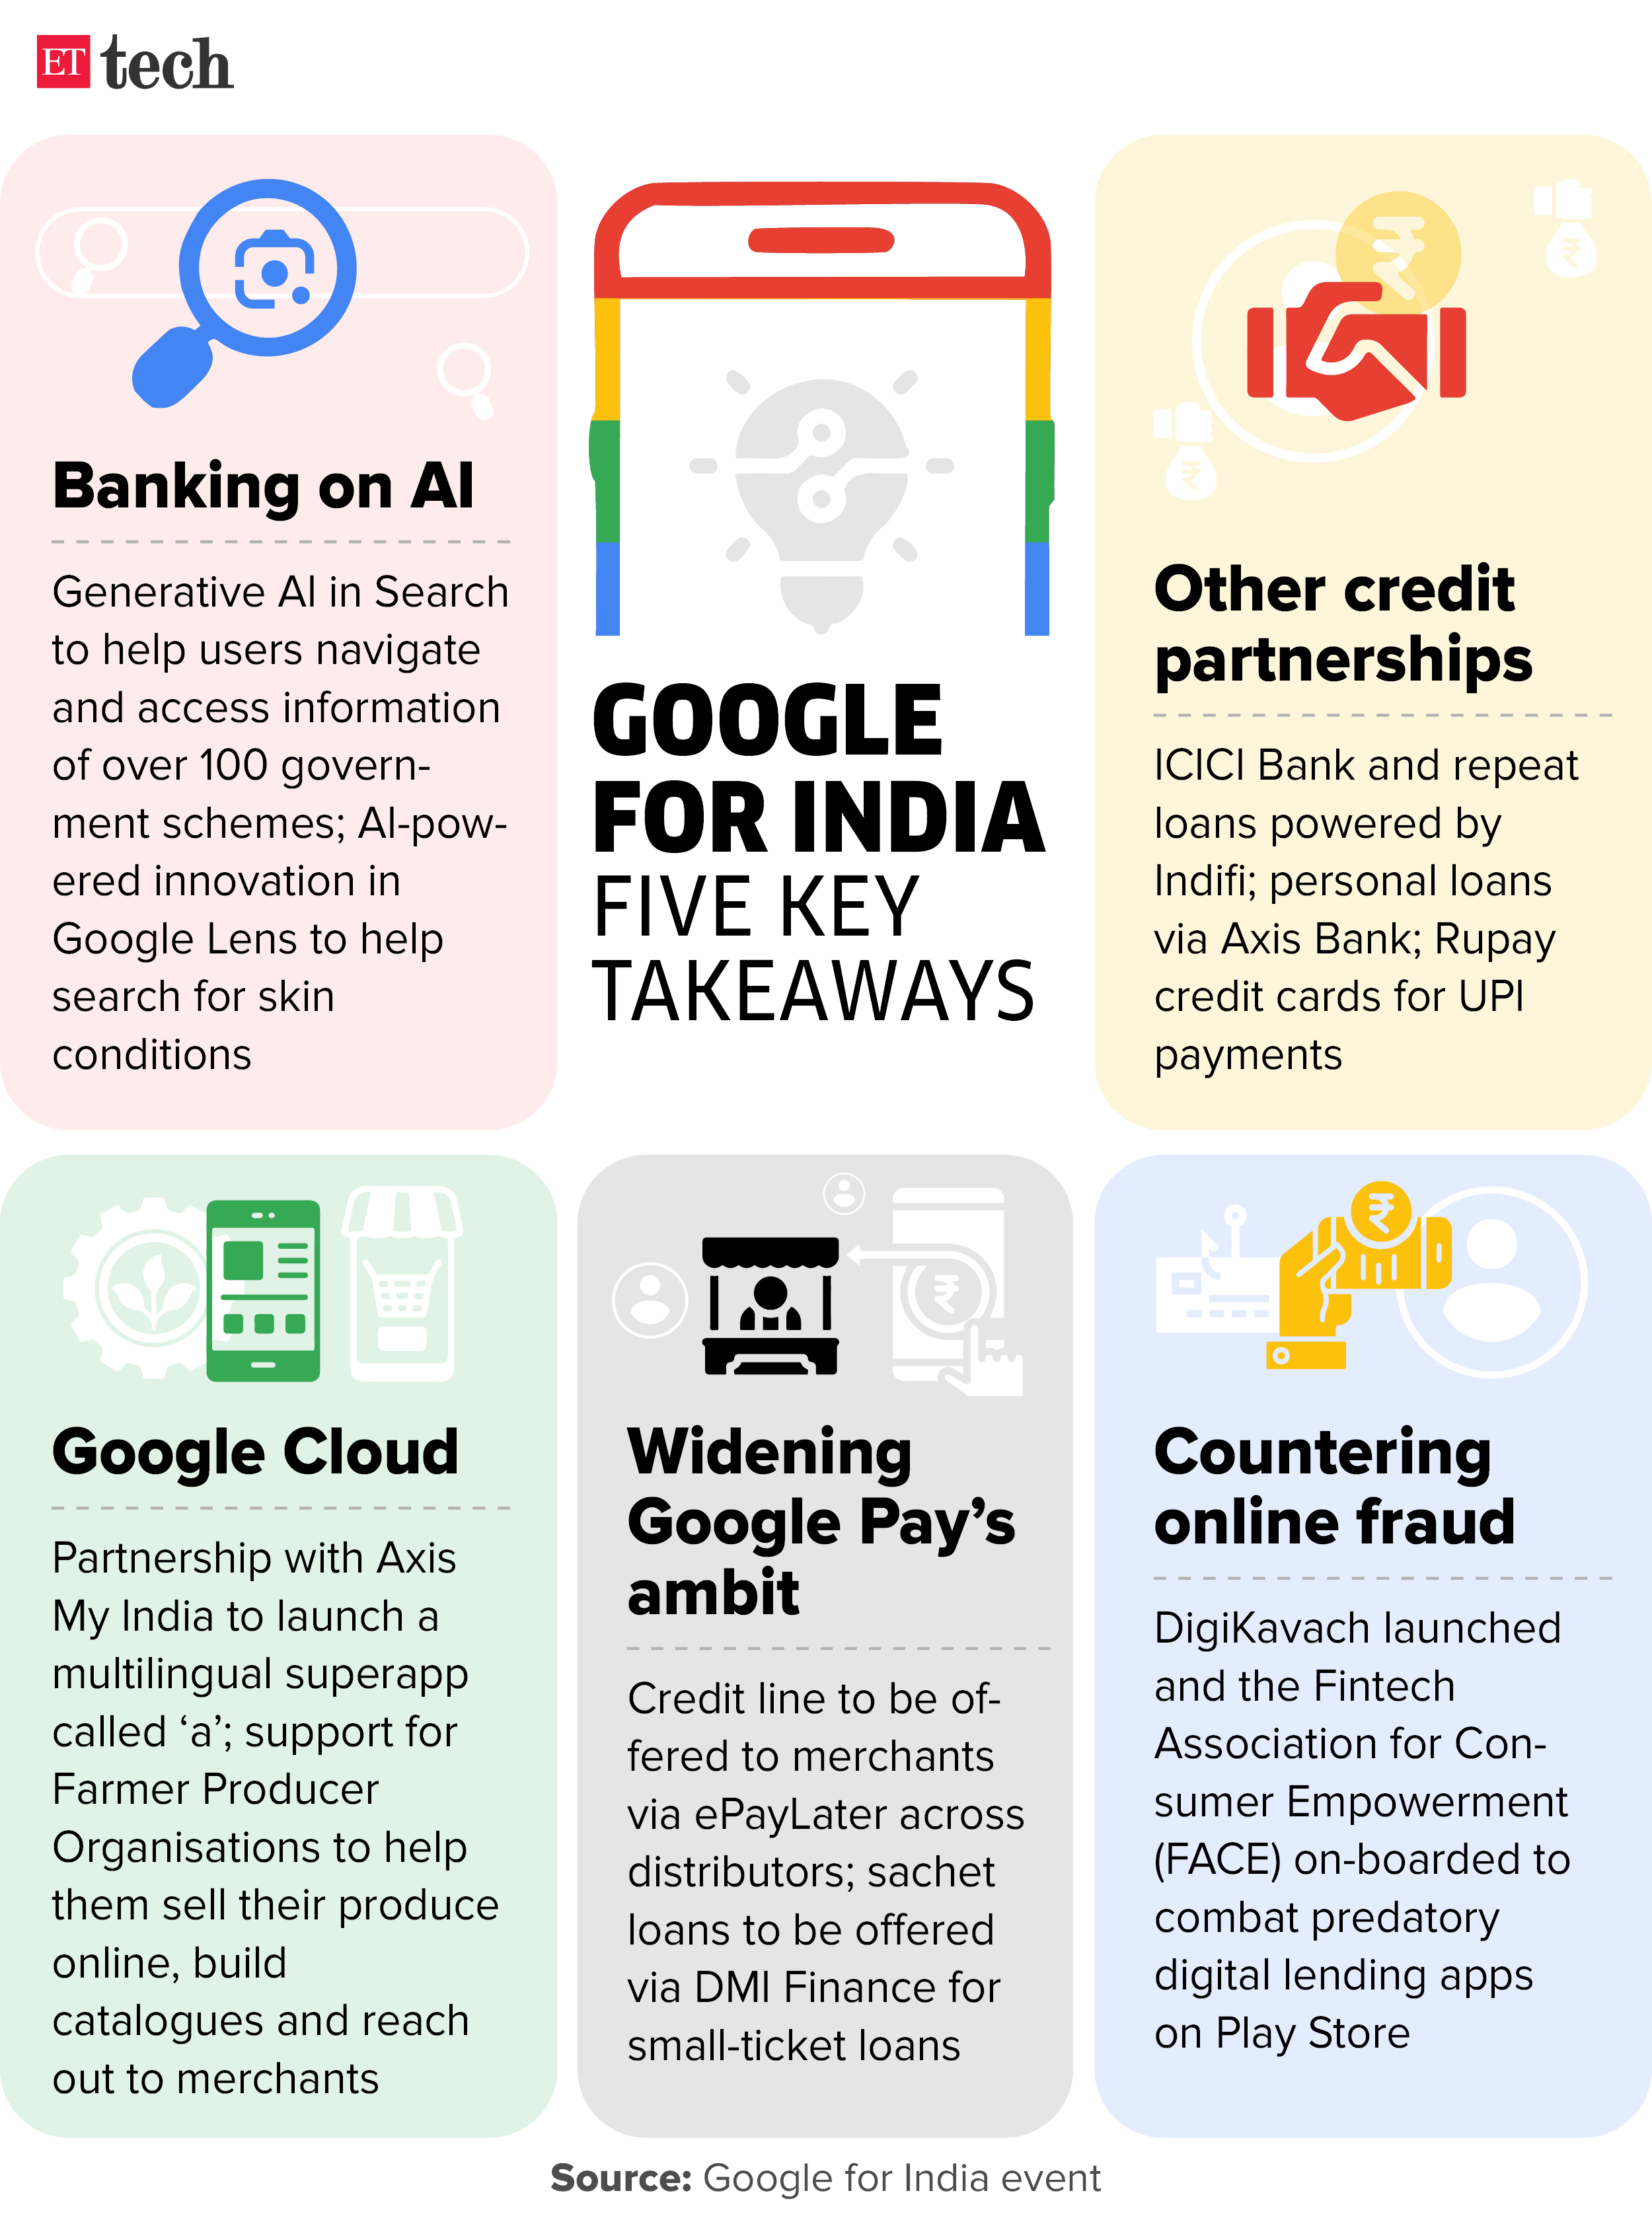 Google for India Five key takeaways